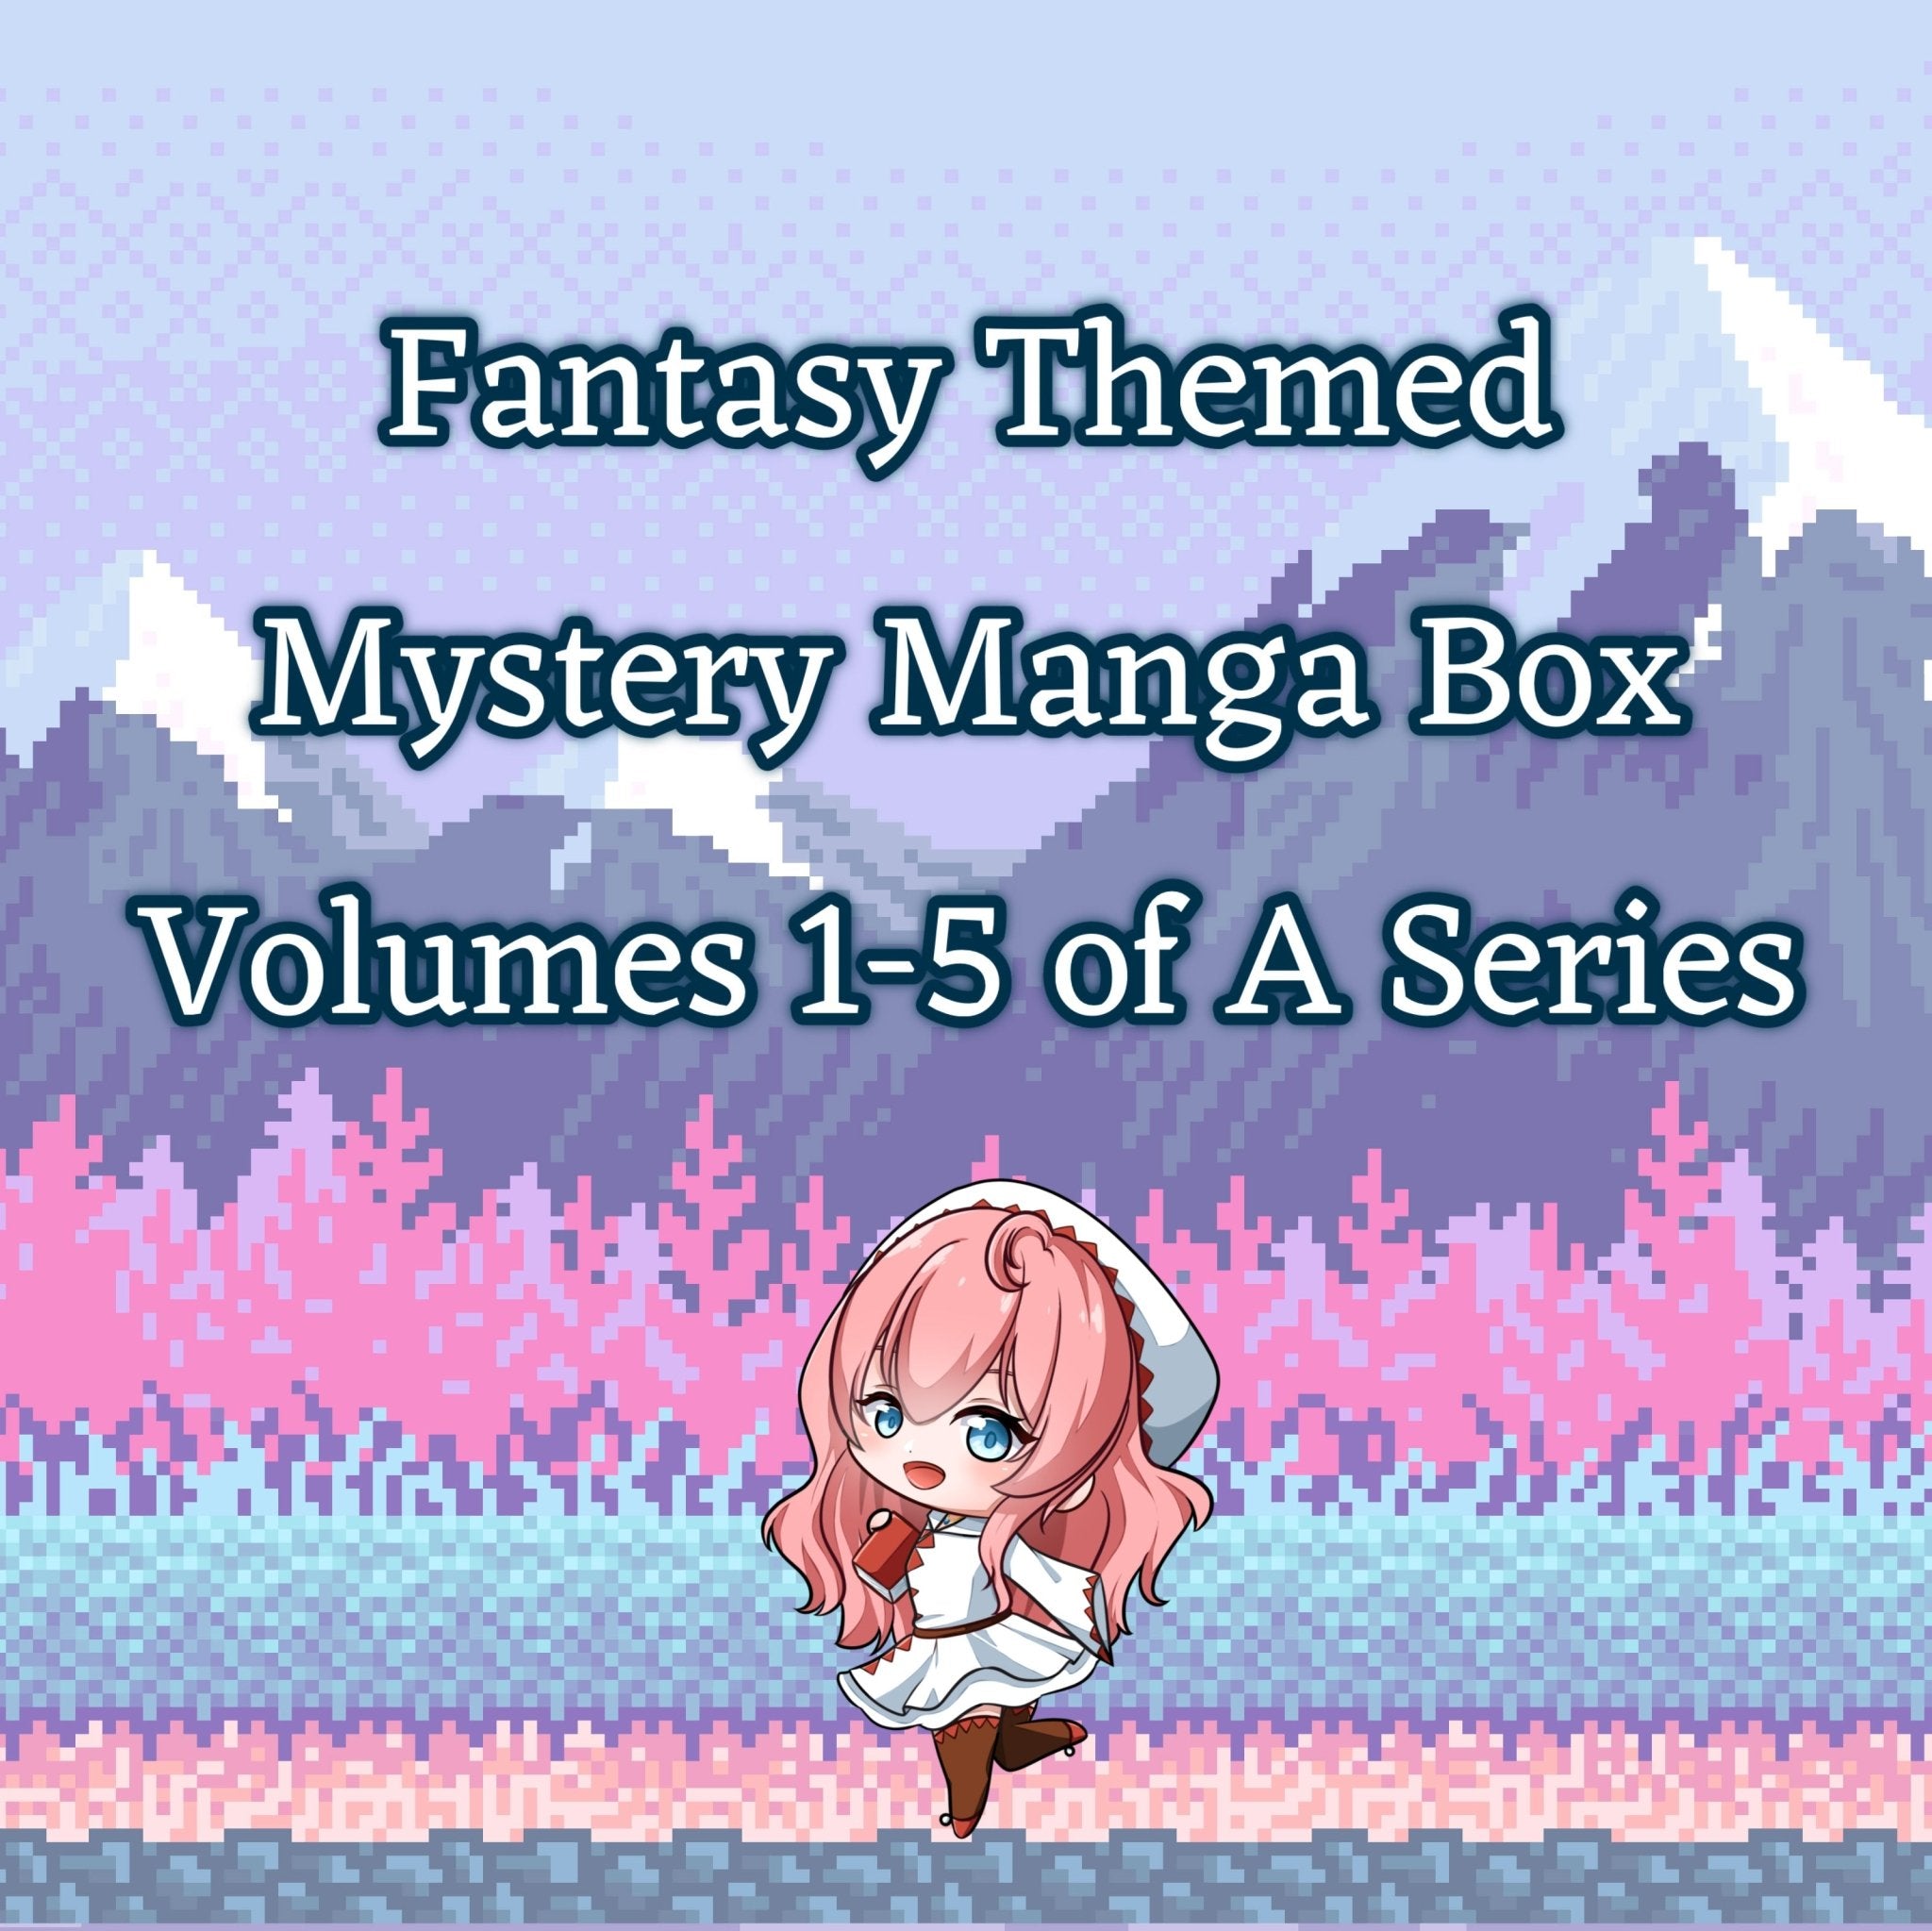 Fantasy Themed Volumes 1-5 Mystery Manga Box - English Mixed Manga